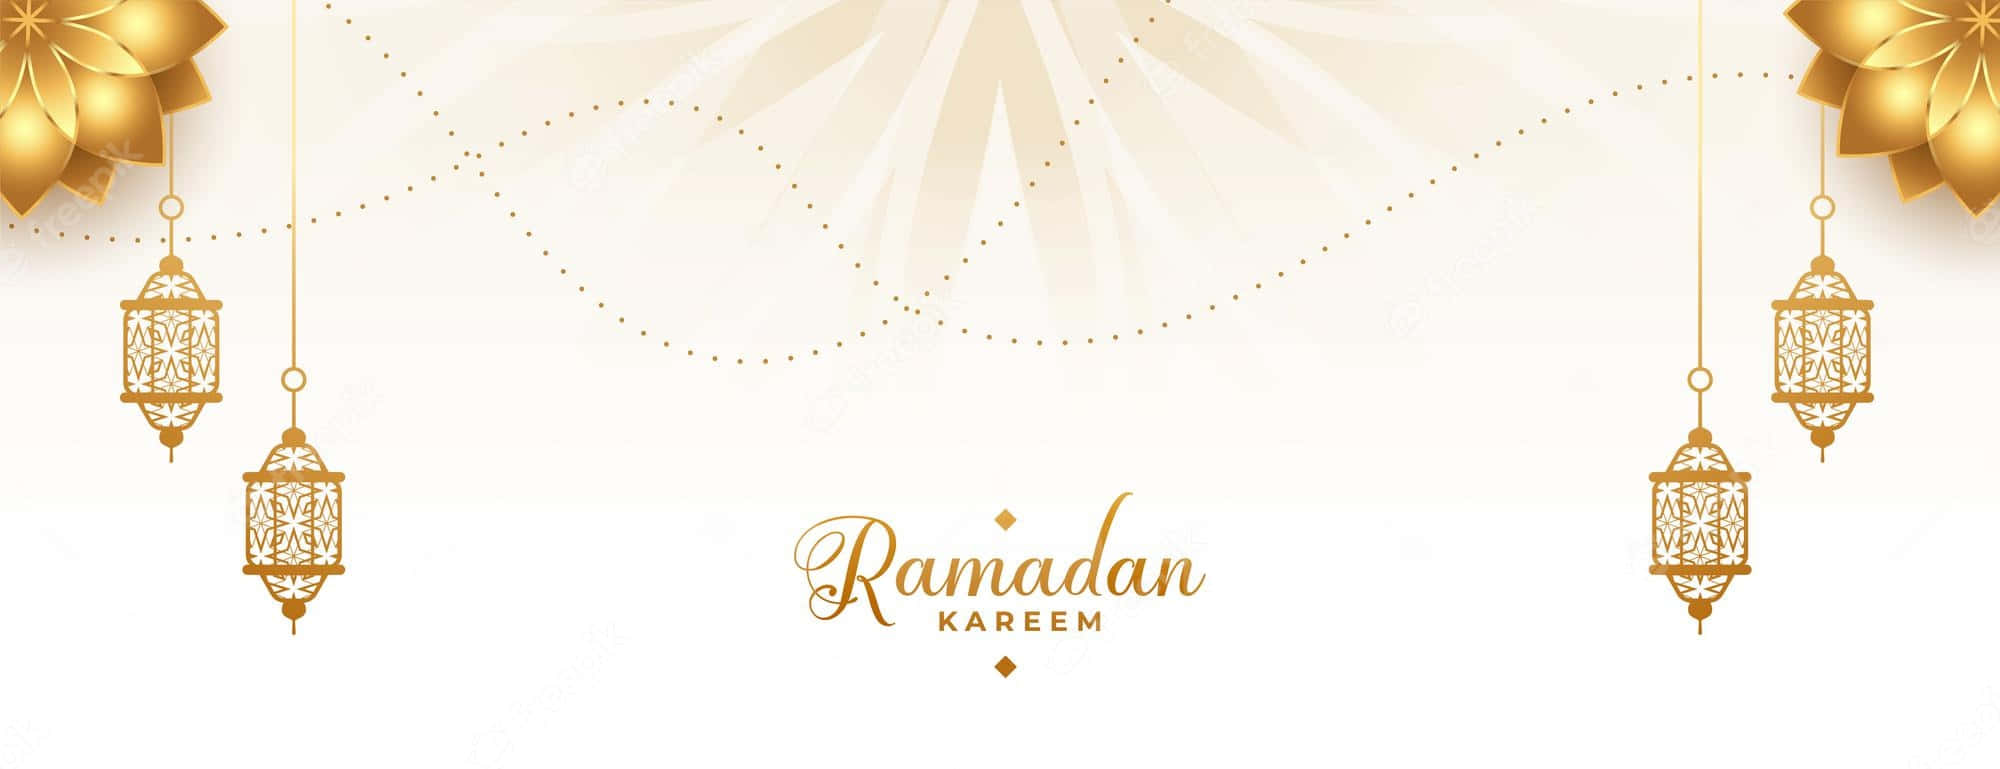 Minimalist White Ramadan Picture